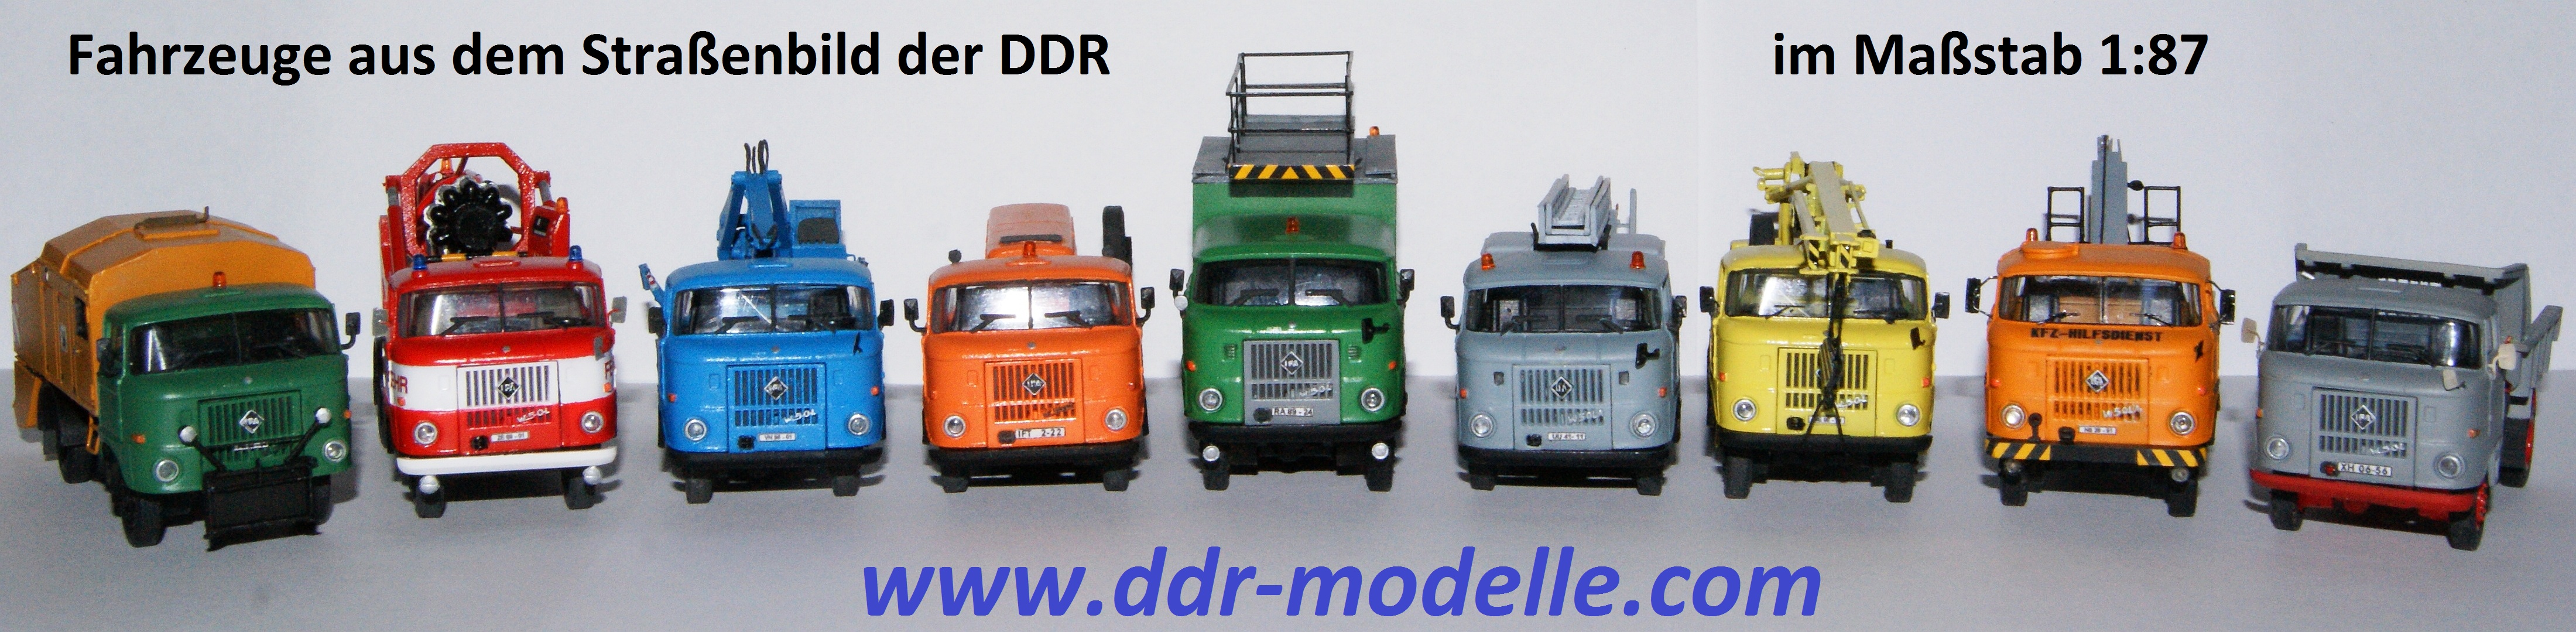 (c) Ddr-modelle.com